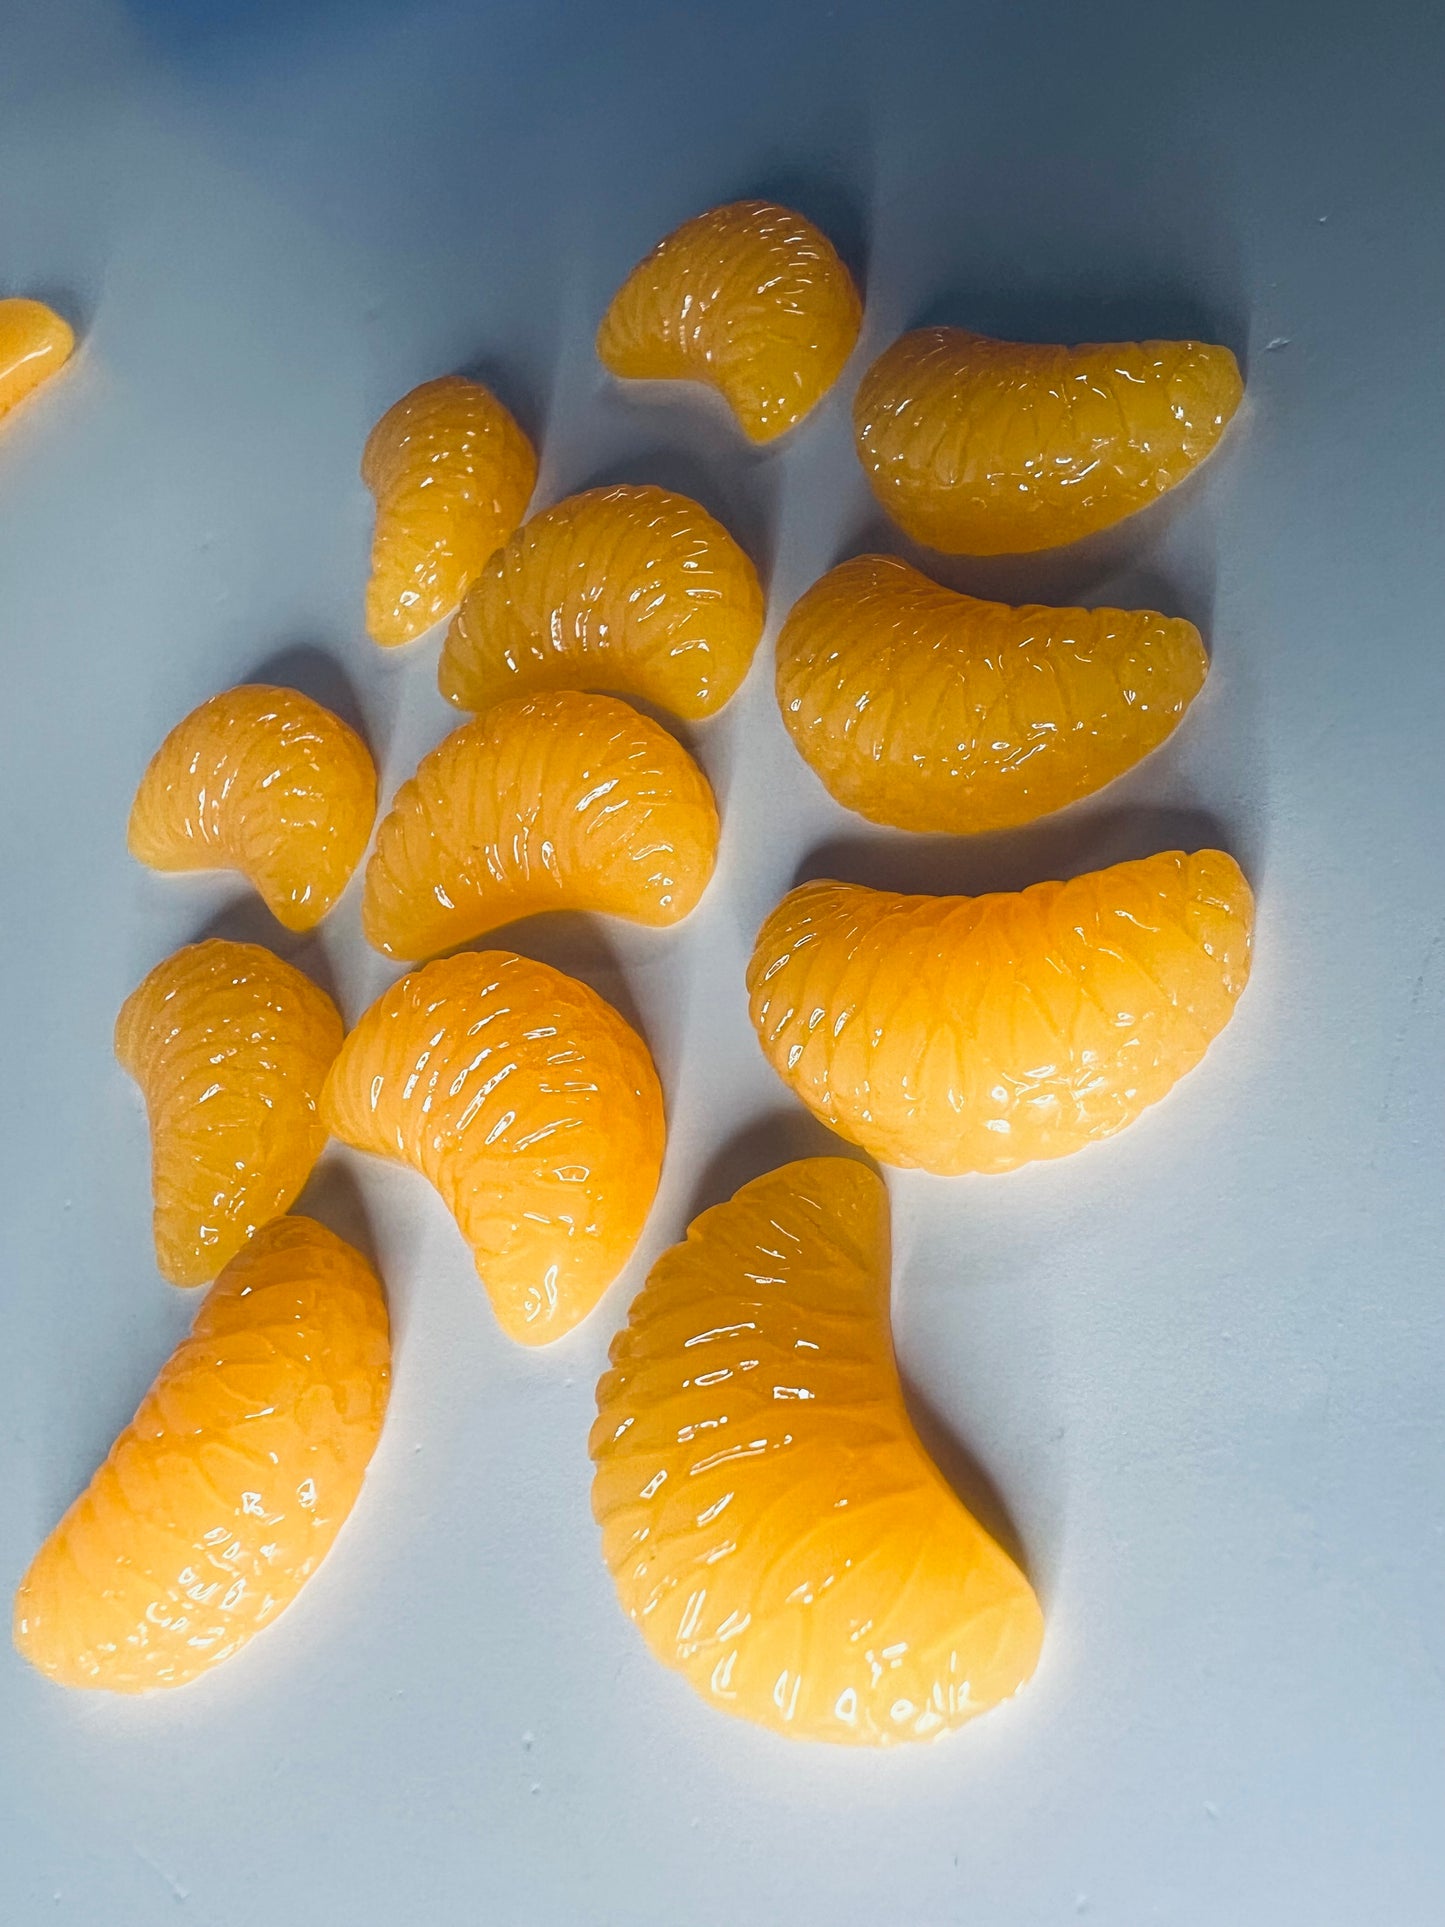 Miniature Orange Trinkets  Fruit Mini Objects Speech Montessori Language Objects Dollhouse Miniature Food Imitation Orange Slice